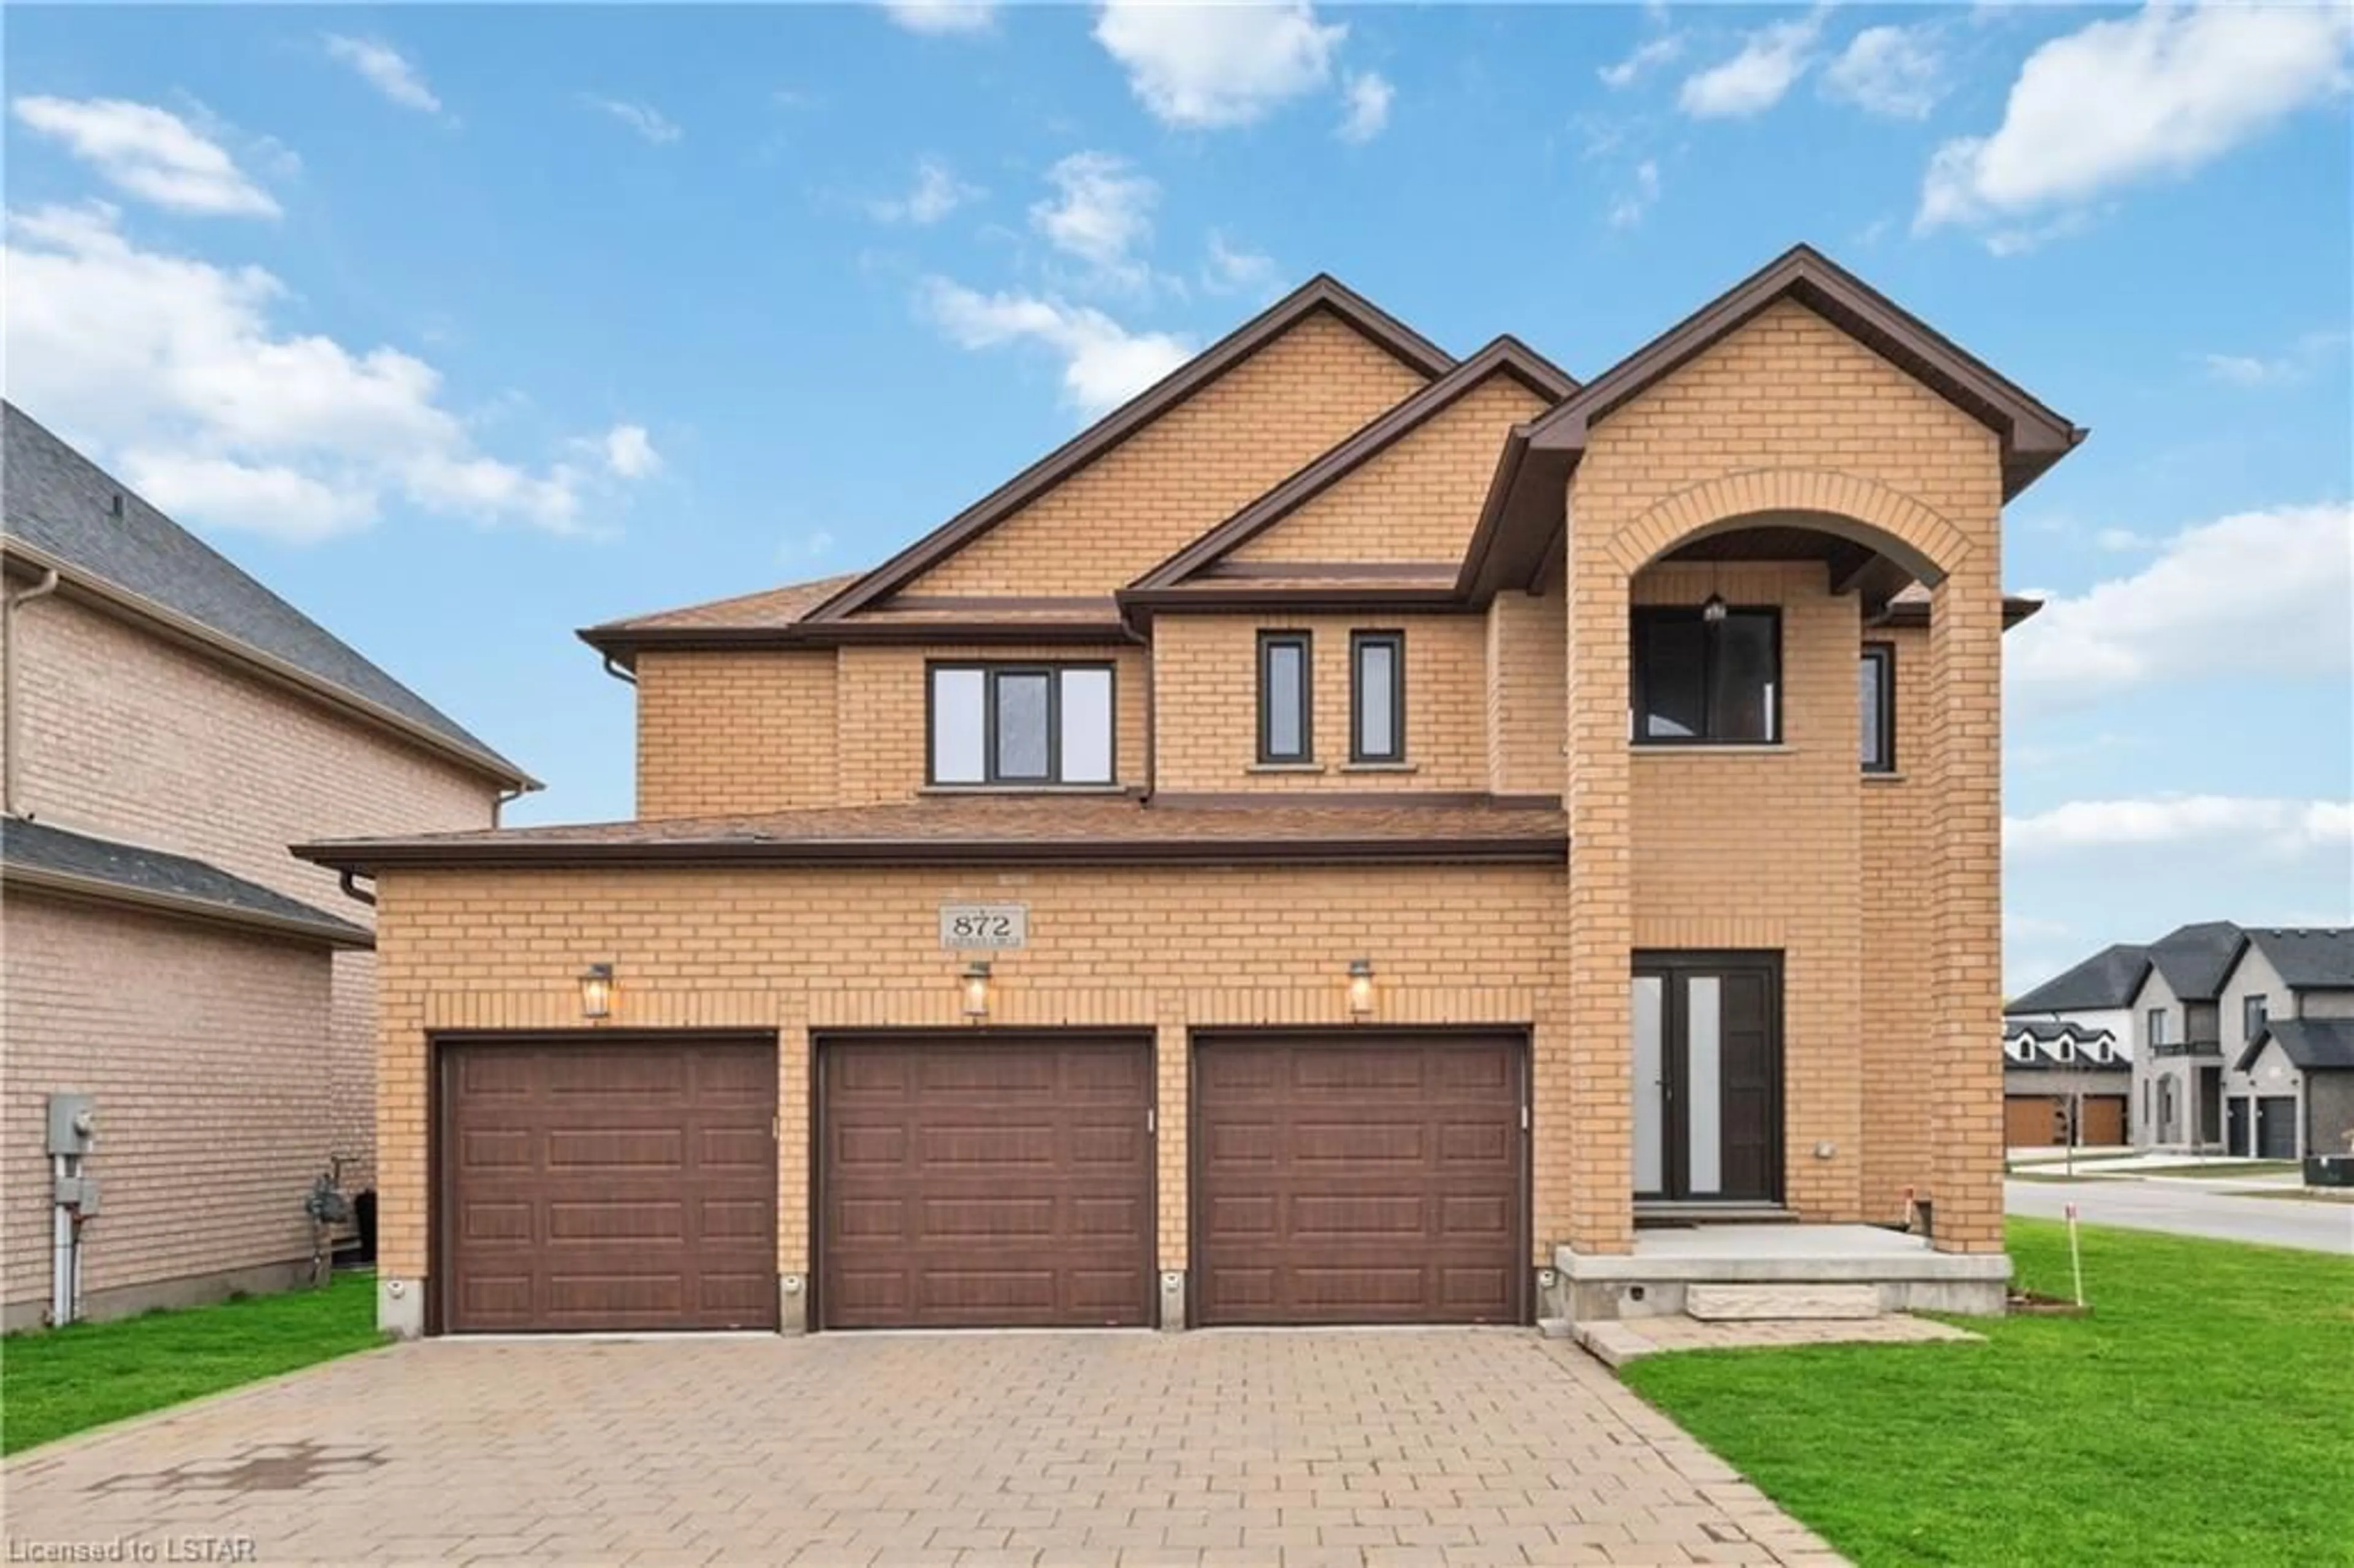 Home with brick exterior material for 872 Zaifman Cir, London Ontario N5X 0M9